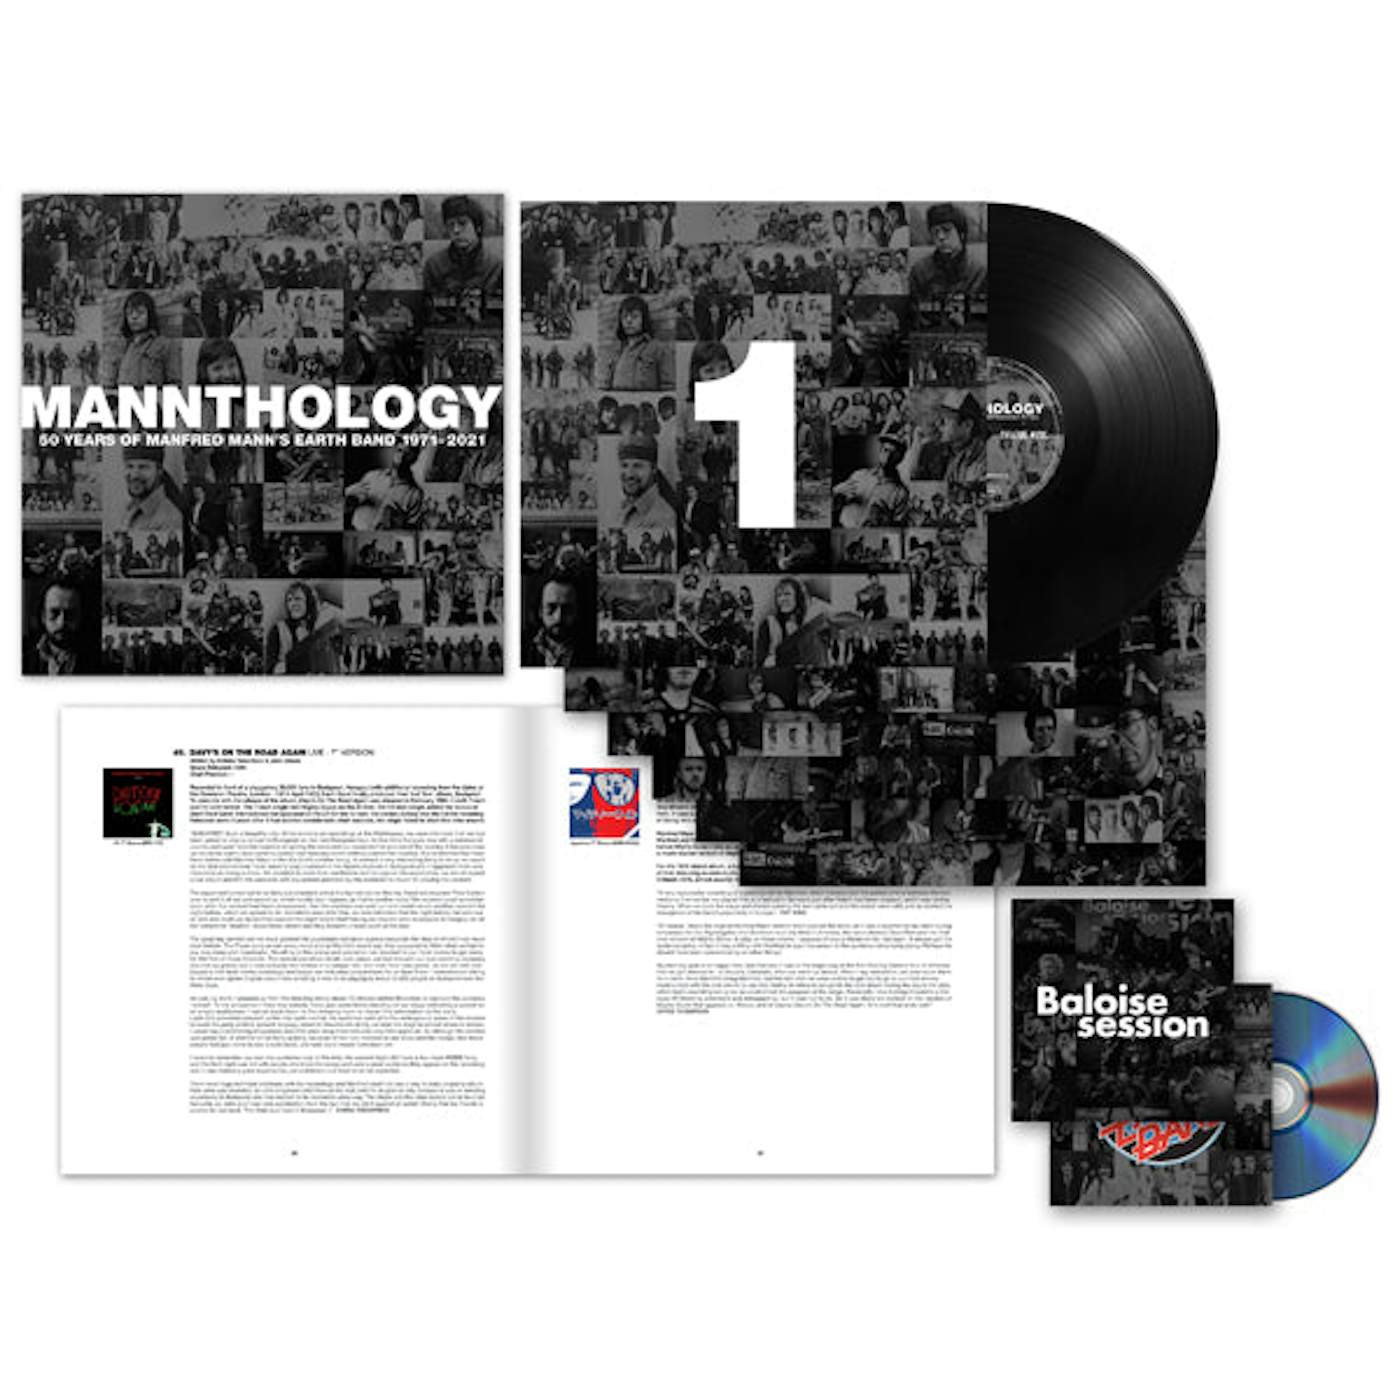 Manfred Mann's Earth Band LP - Mannthology (6lp + 2 Dvd + Book + Slipmat) (Vinyl)